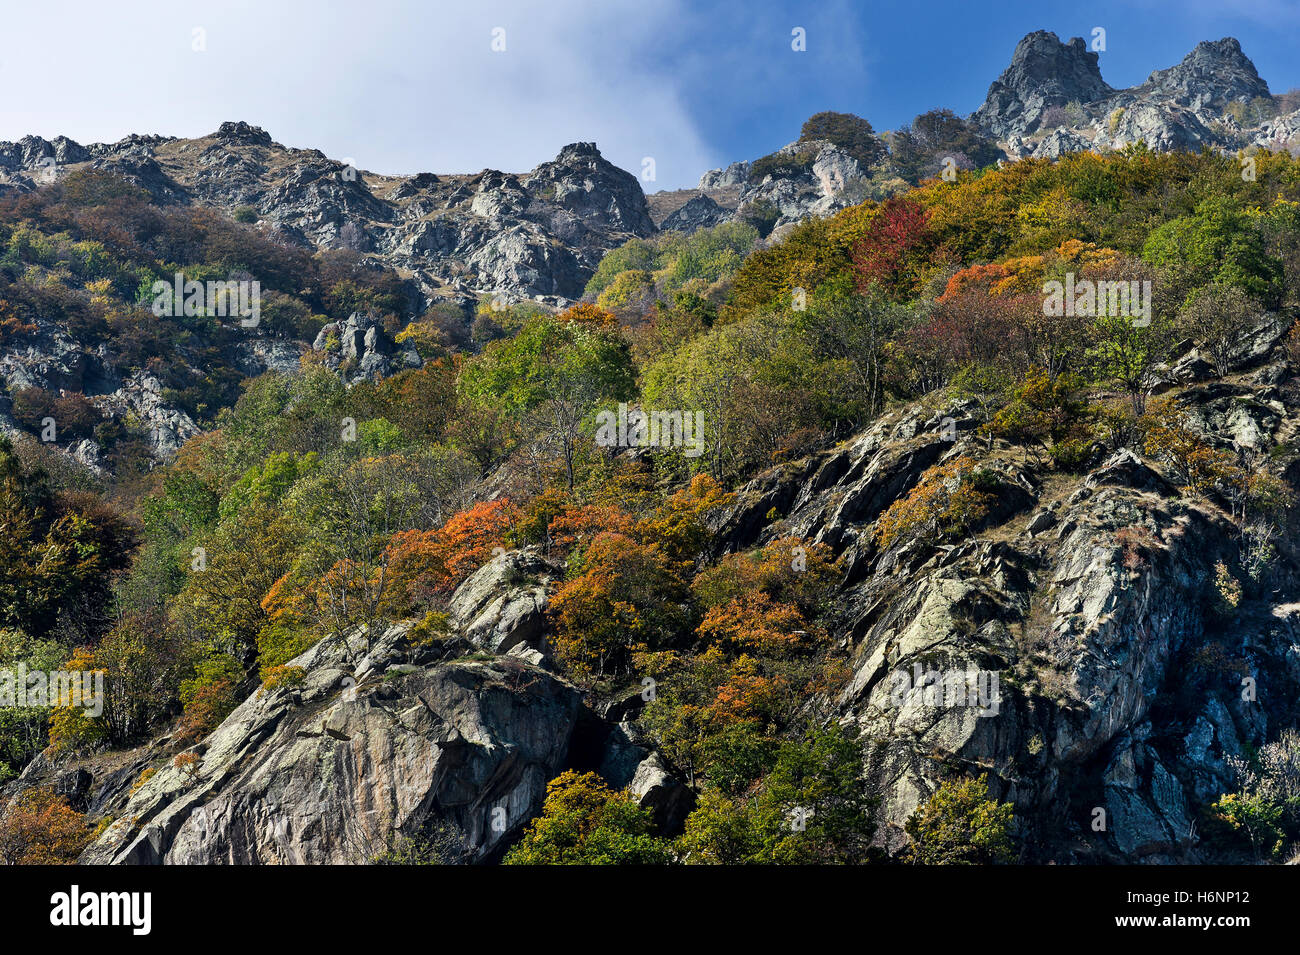 Italy, Piedmont, Alpi Marittime NP, Gesso valley, landscape Stock Photo